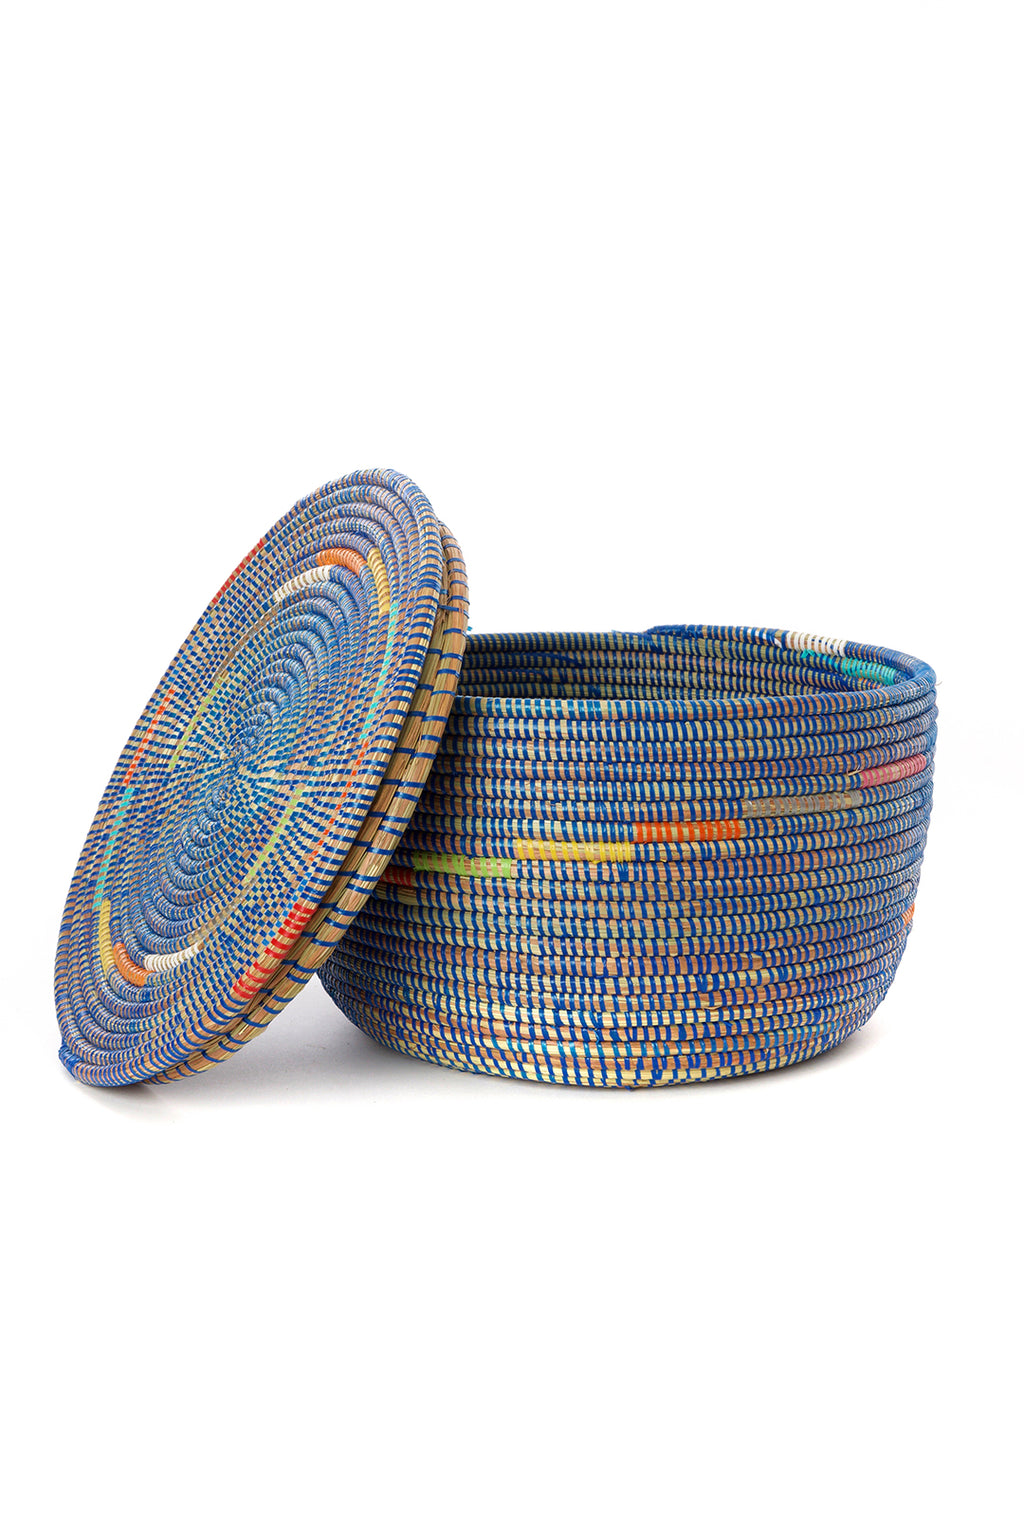 Blue Flat Top Storage Basket with Colorful Spiral Default Title